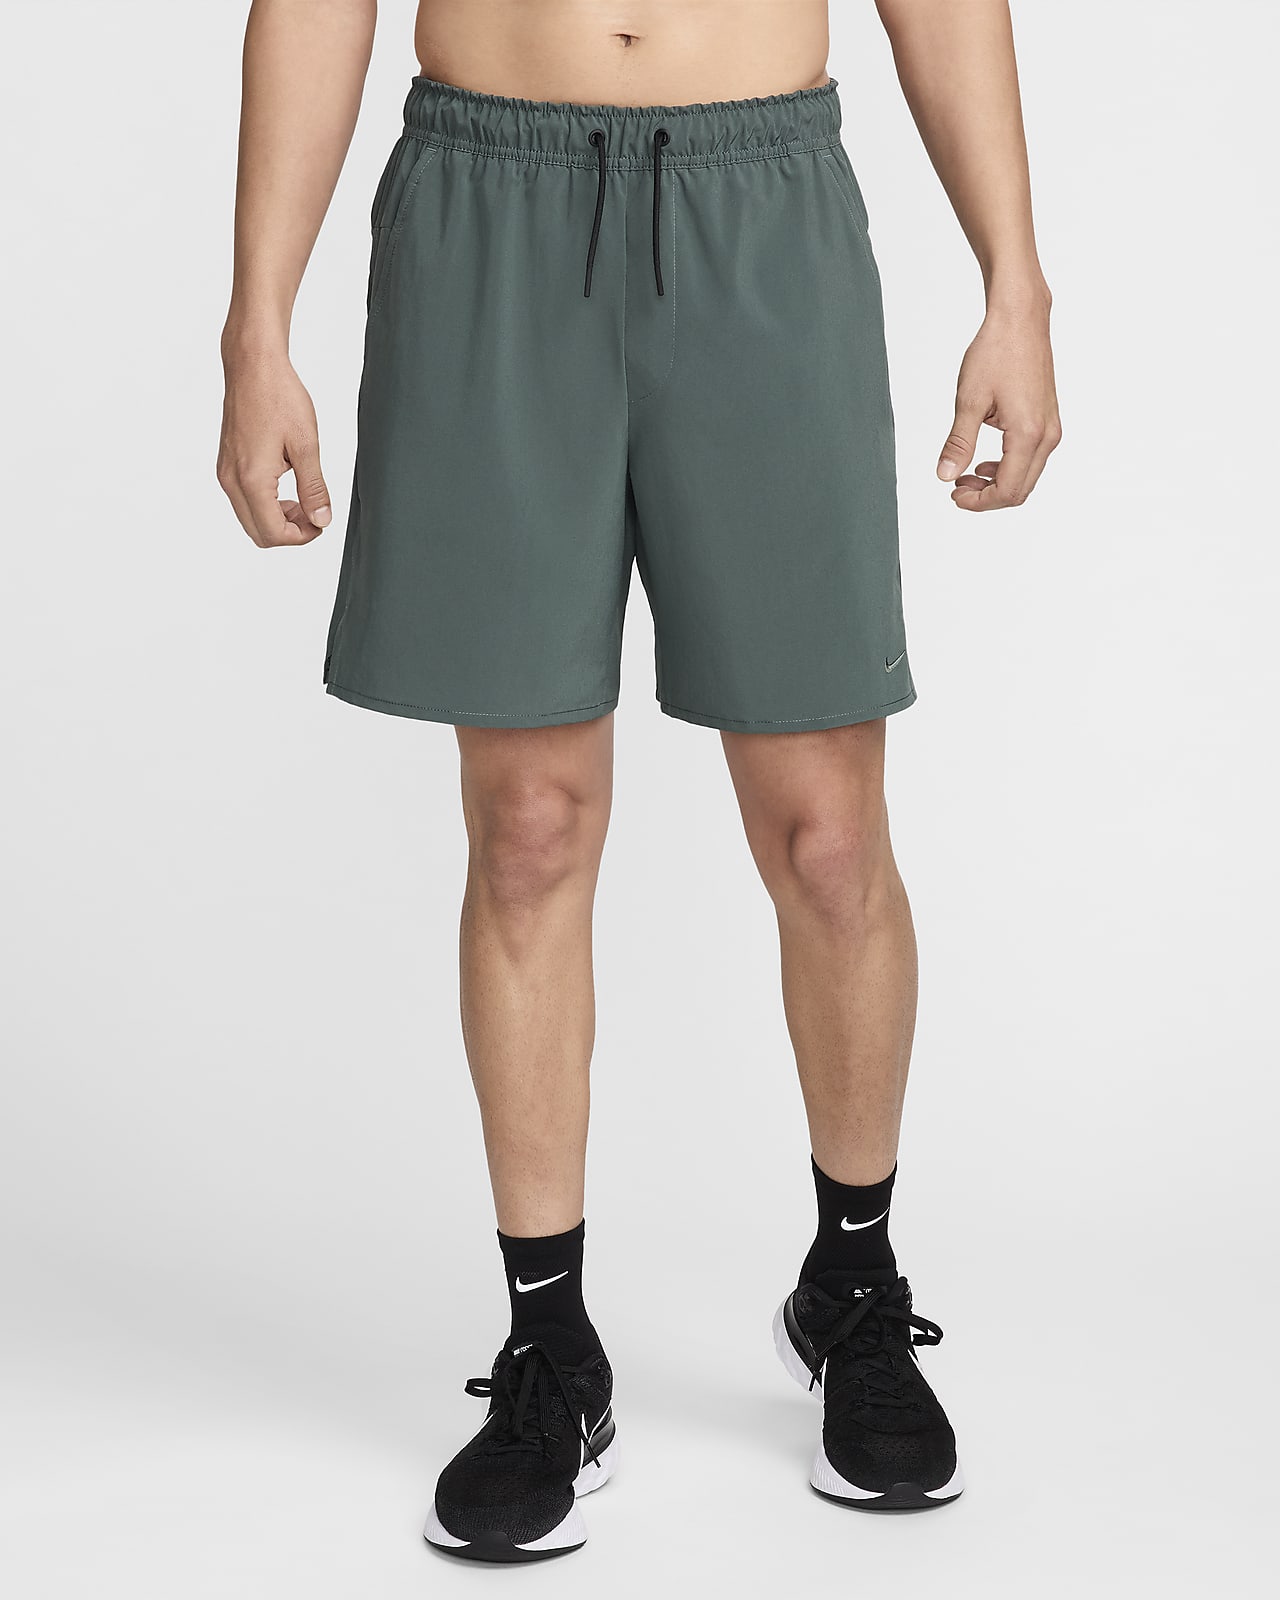 Nike Unlimited Pantalón corto Dri-FIT versátil de 18 cm sin forro - Hombre